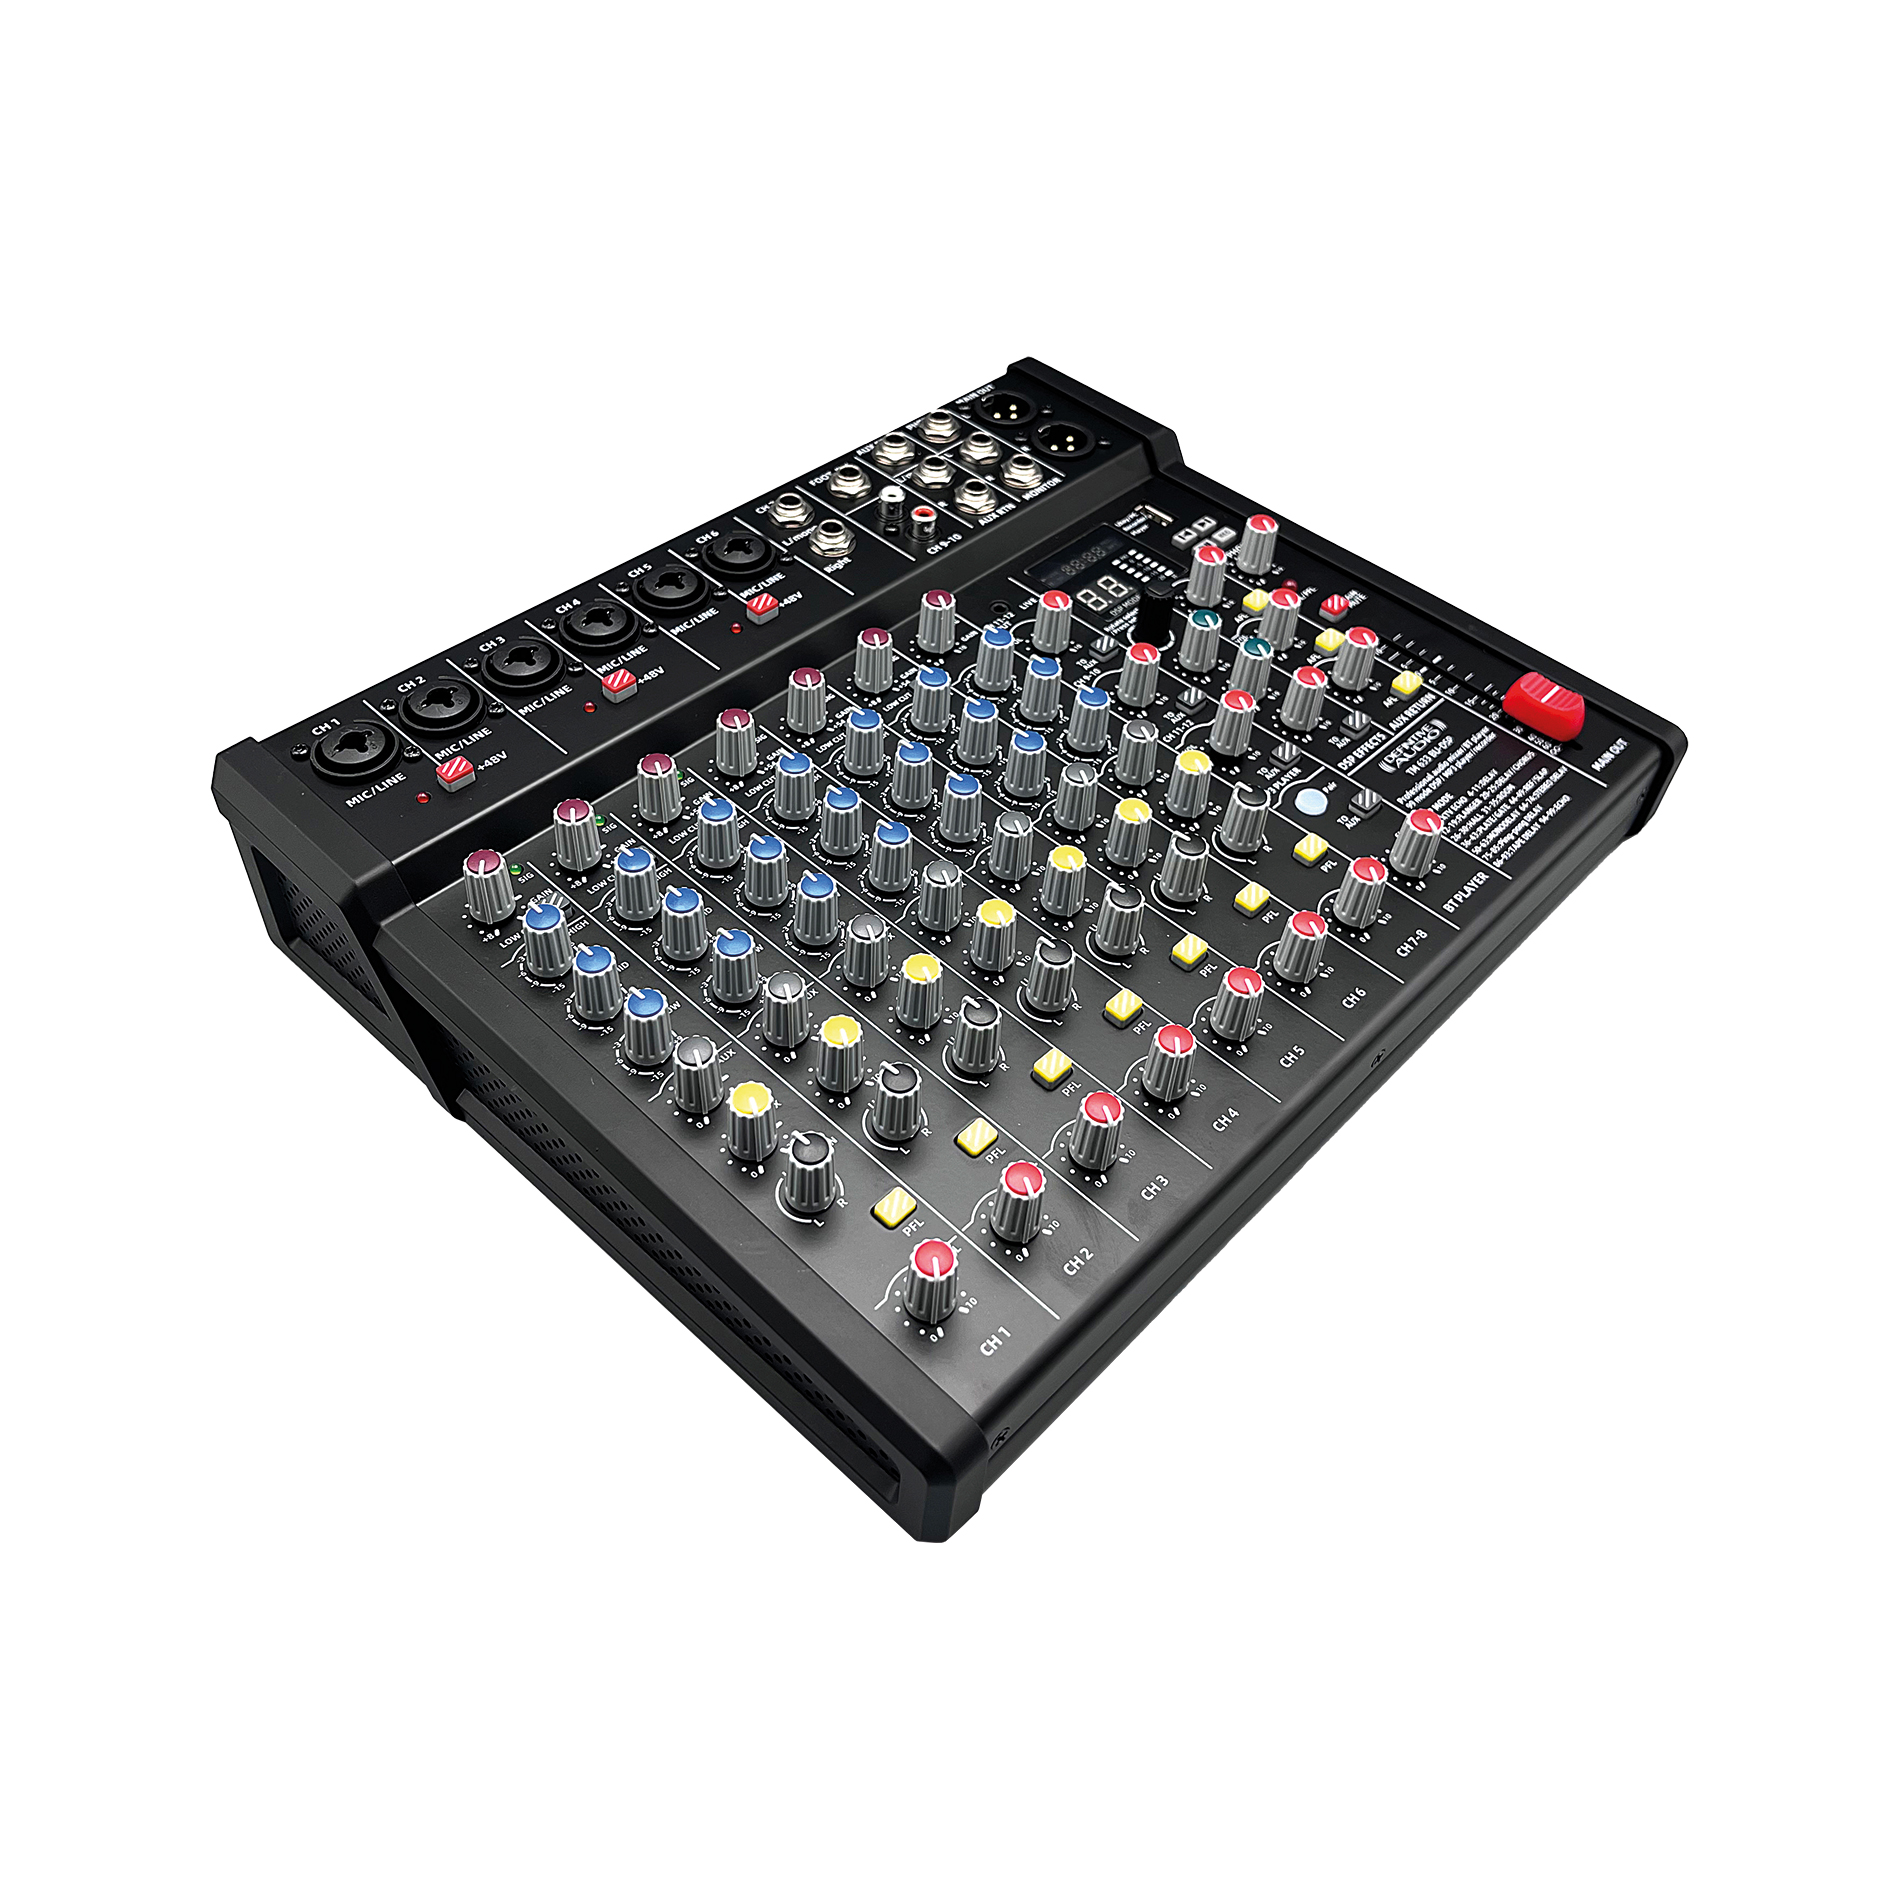 Definitive Audio Tm 633 Bu-dsp - Analog mixing desk - Variation 2